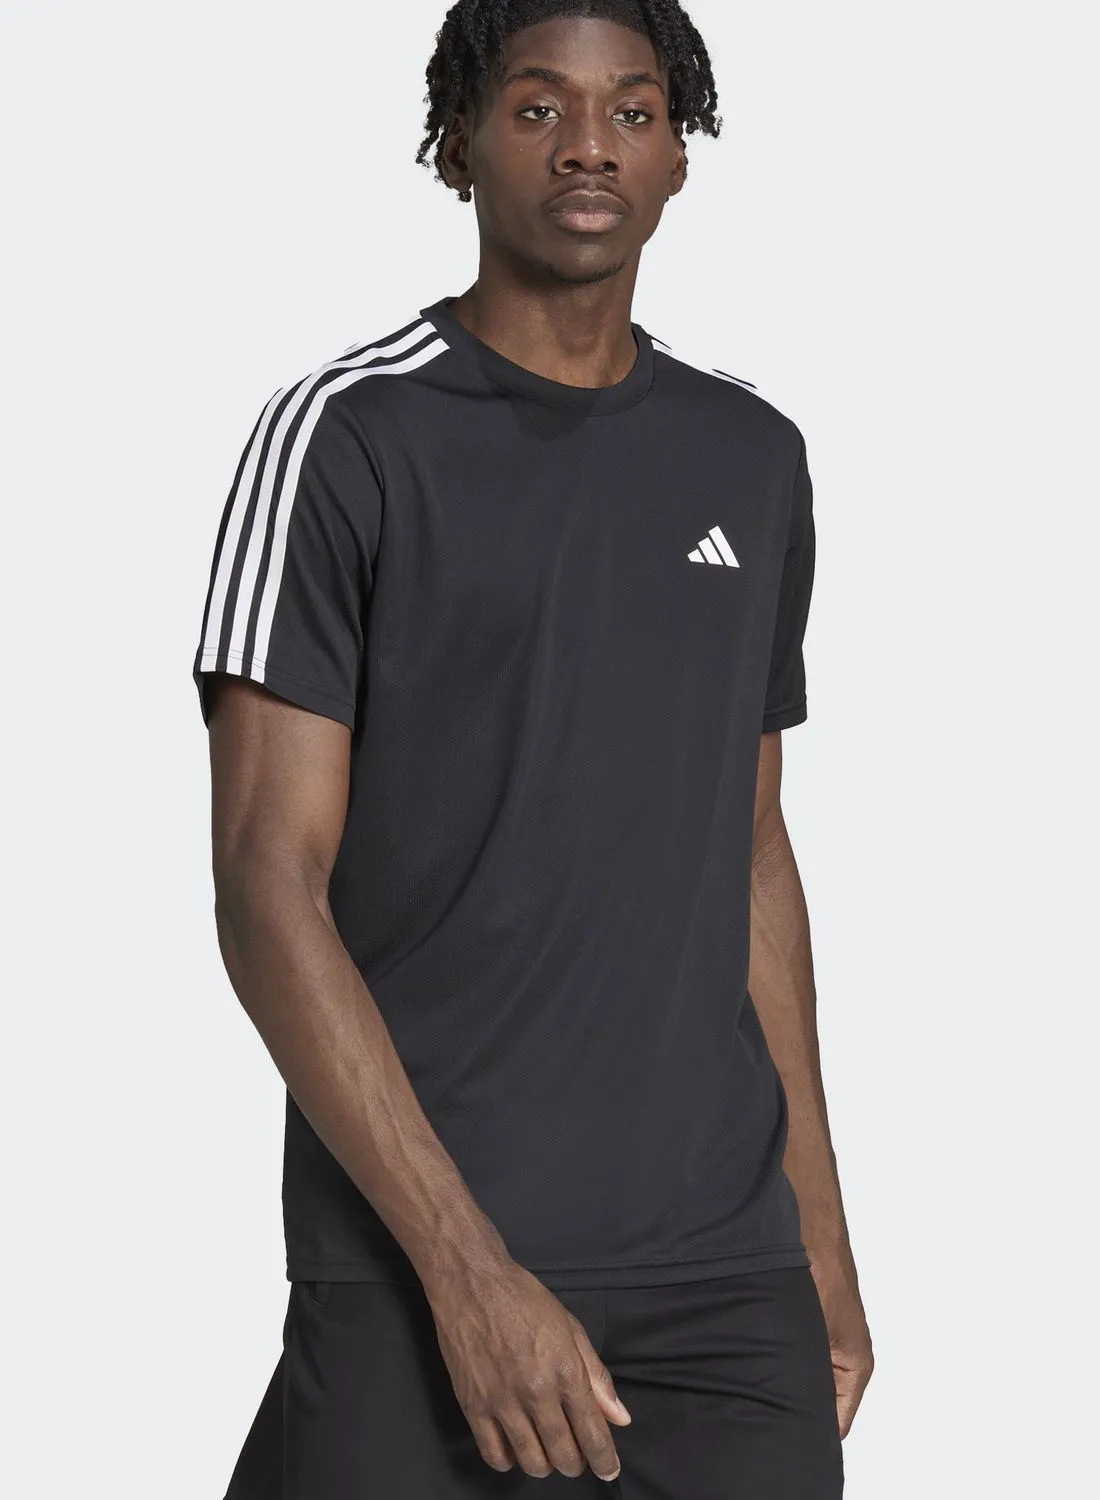 Adidas Train Essentials 3-Stripes Training T-Shirt